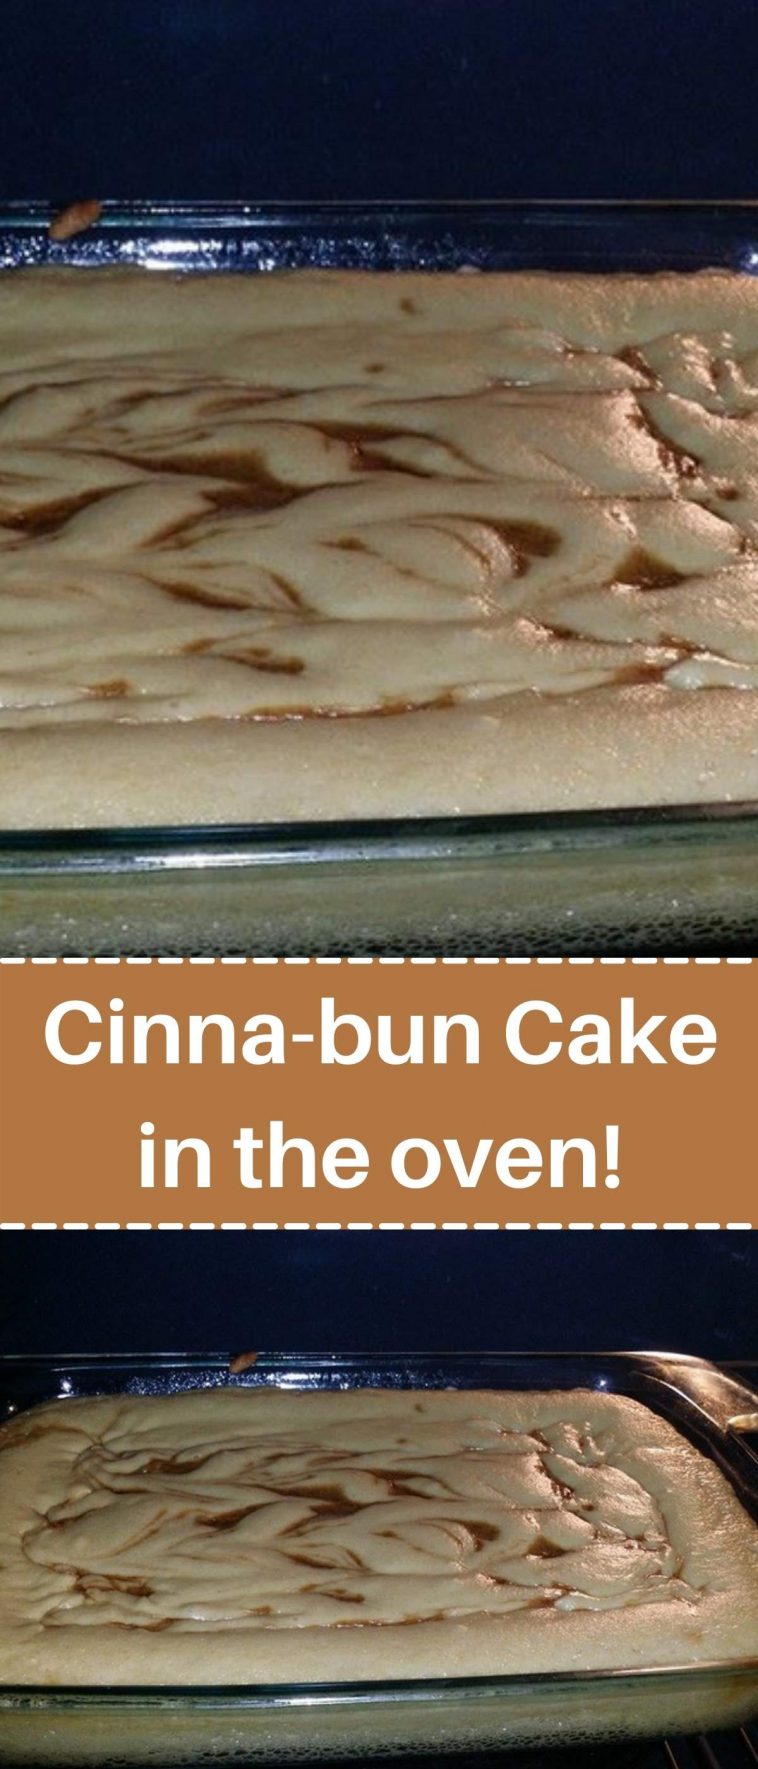 Cinna-bun Cake in the oven!